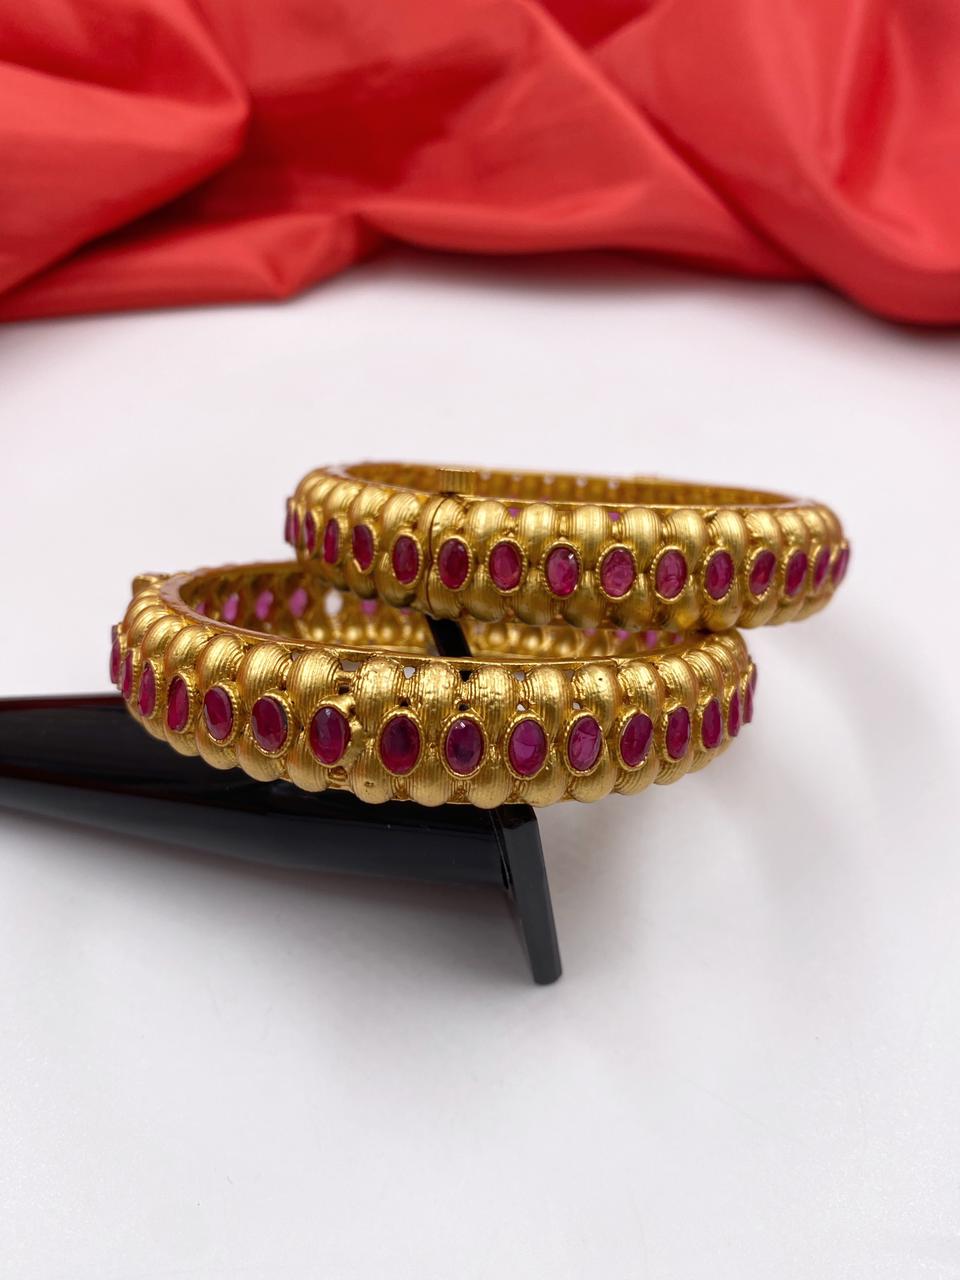 Designer Antique One Gram Gold Look Kangan Bangles For Ladies By Gehna Shop Antique Golden Bangles